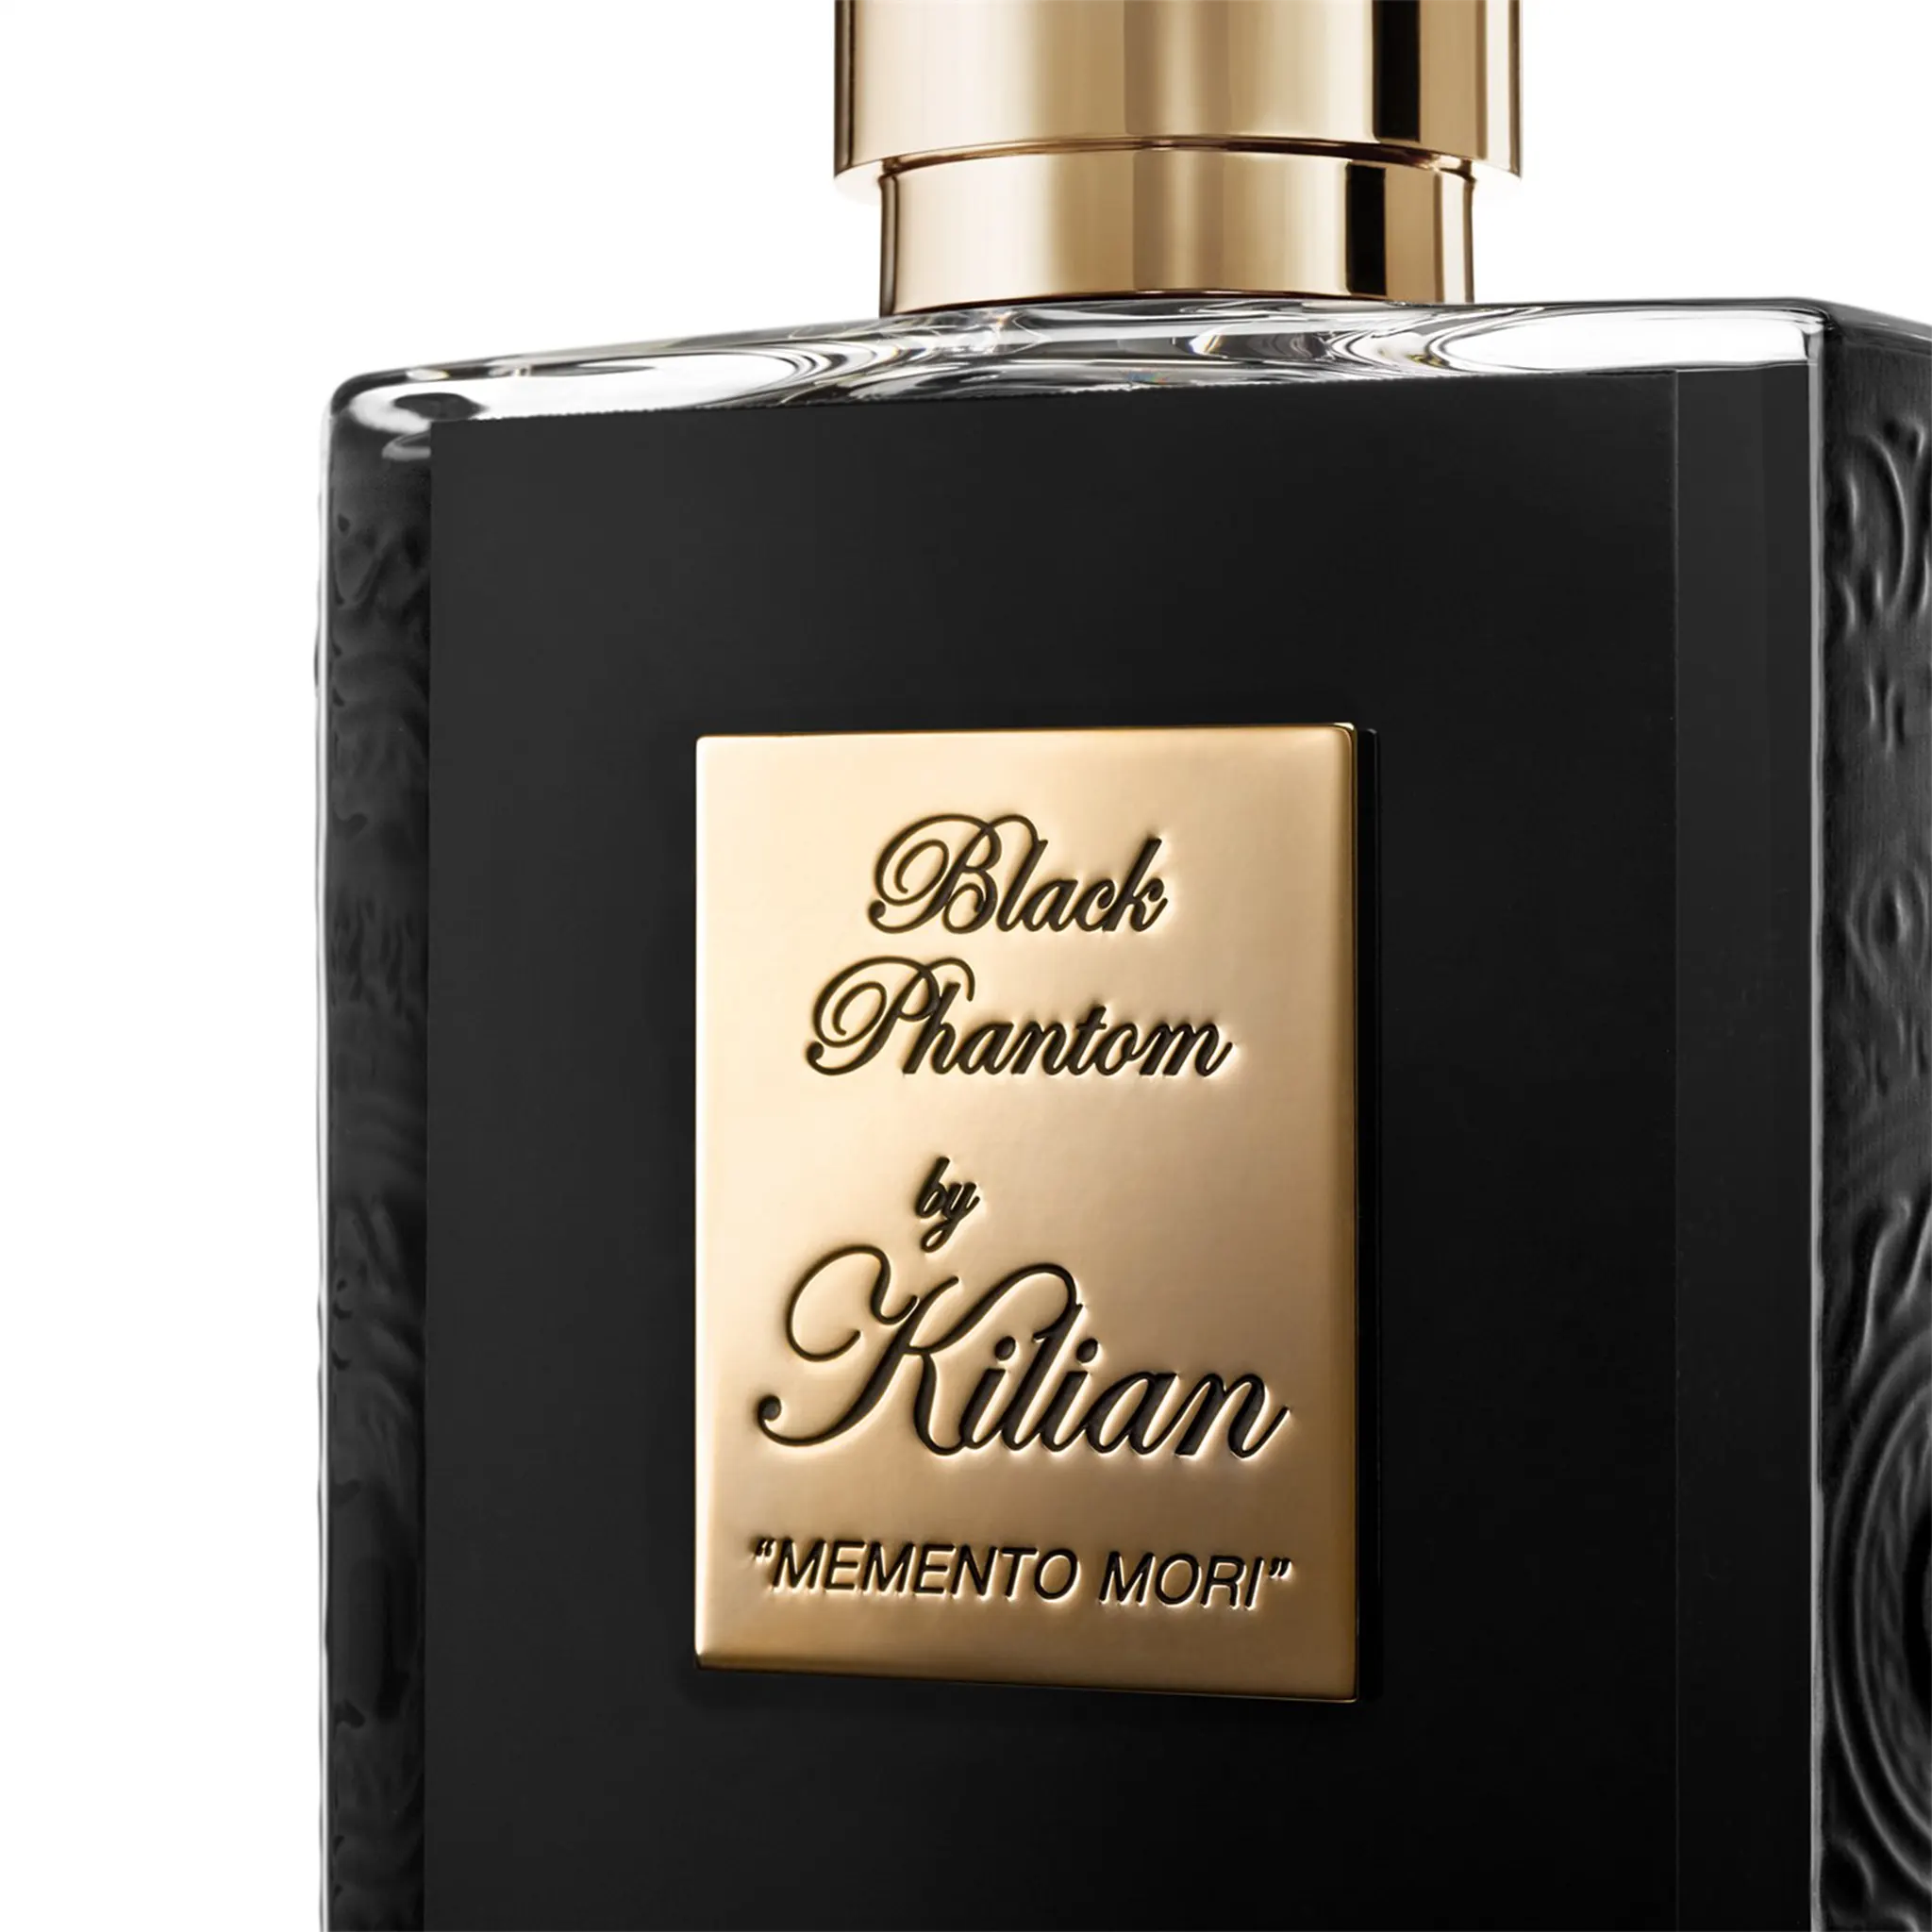 Detail view of Killian Paris Black Phantom Memento Mori Perfume 50ml 46310221